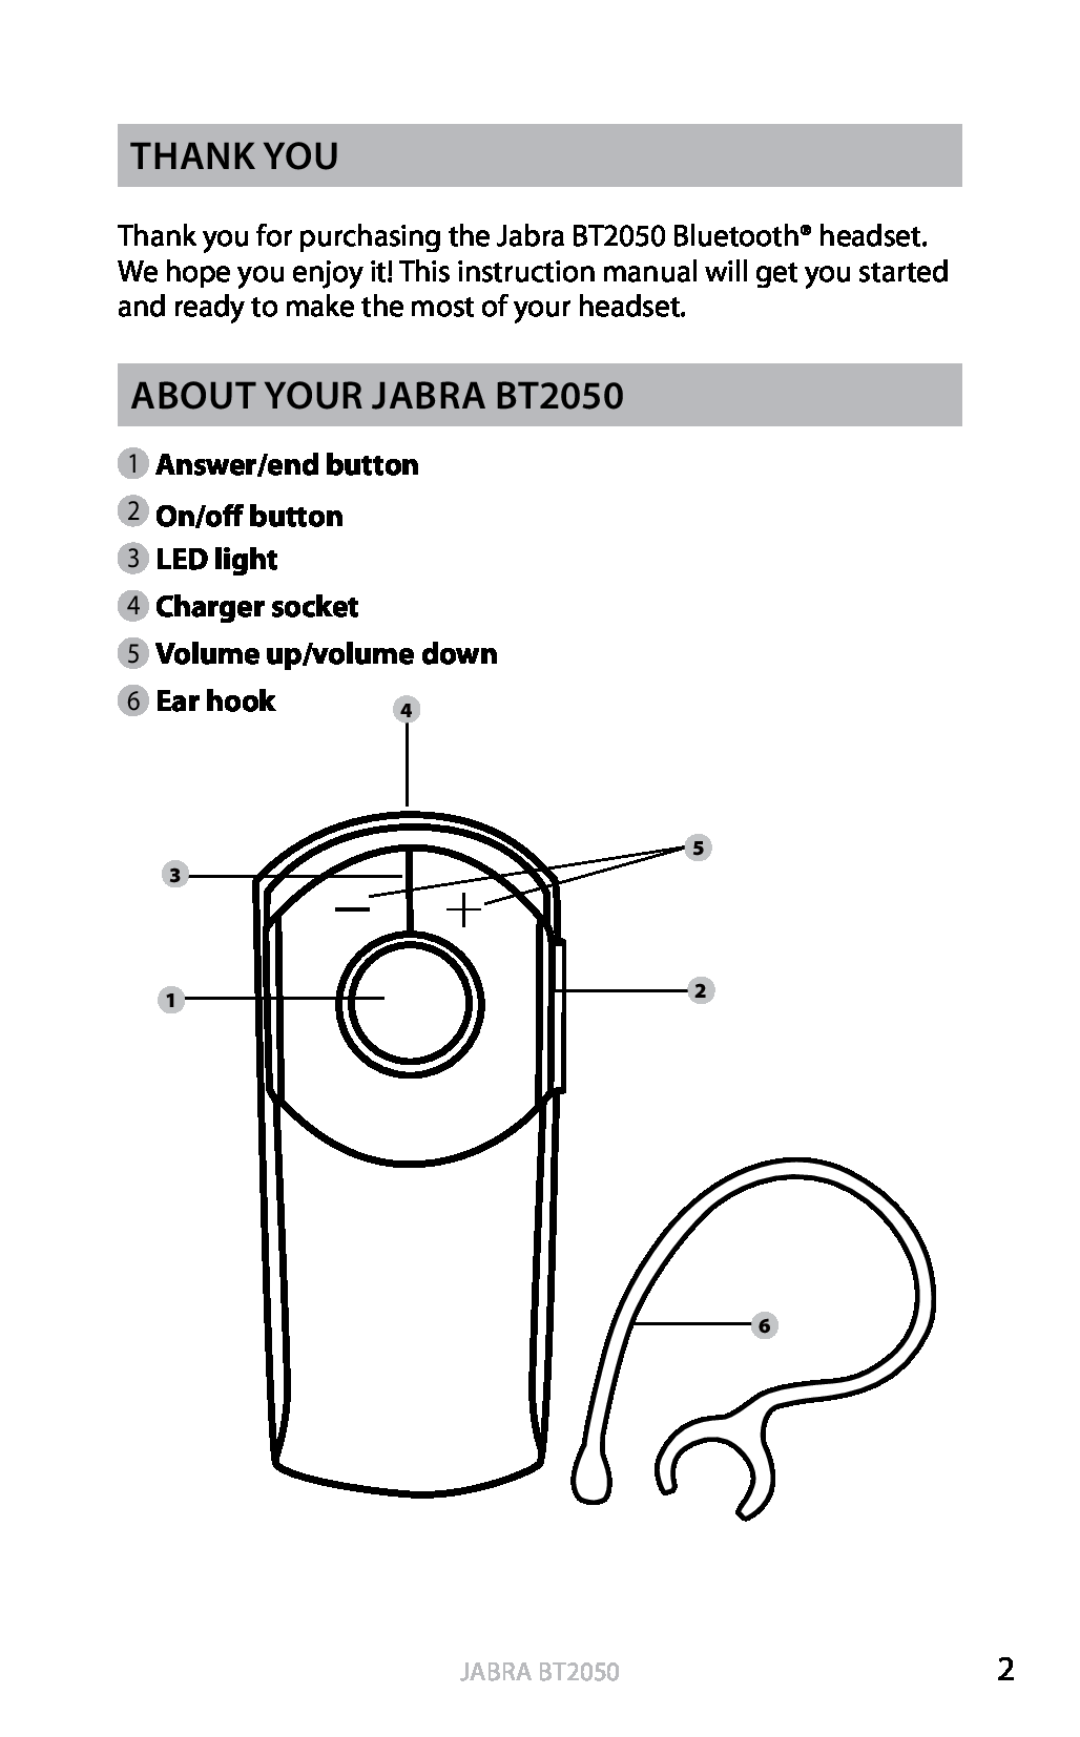 Jabra english, Thank you, About your Jabra BT2050, 1Answer/end button 2On/off button 3LED light, Ear hook, Jabra bt2050 